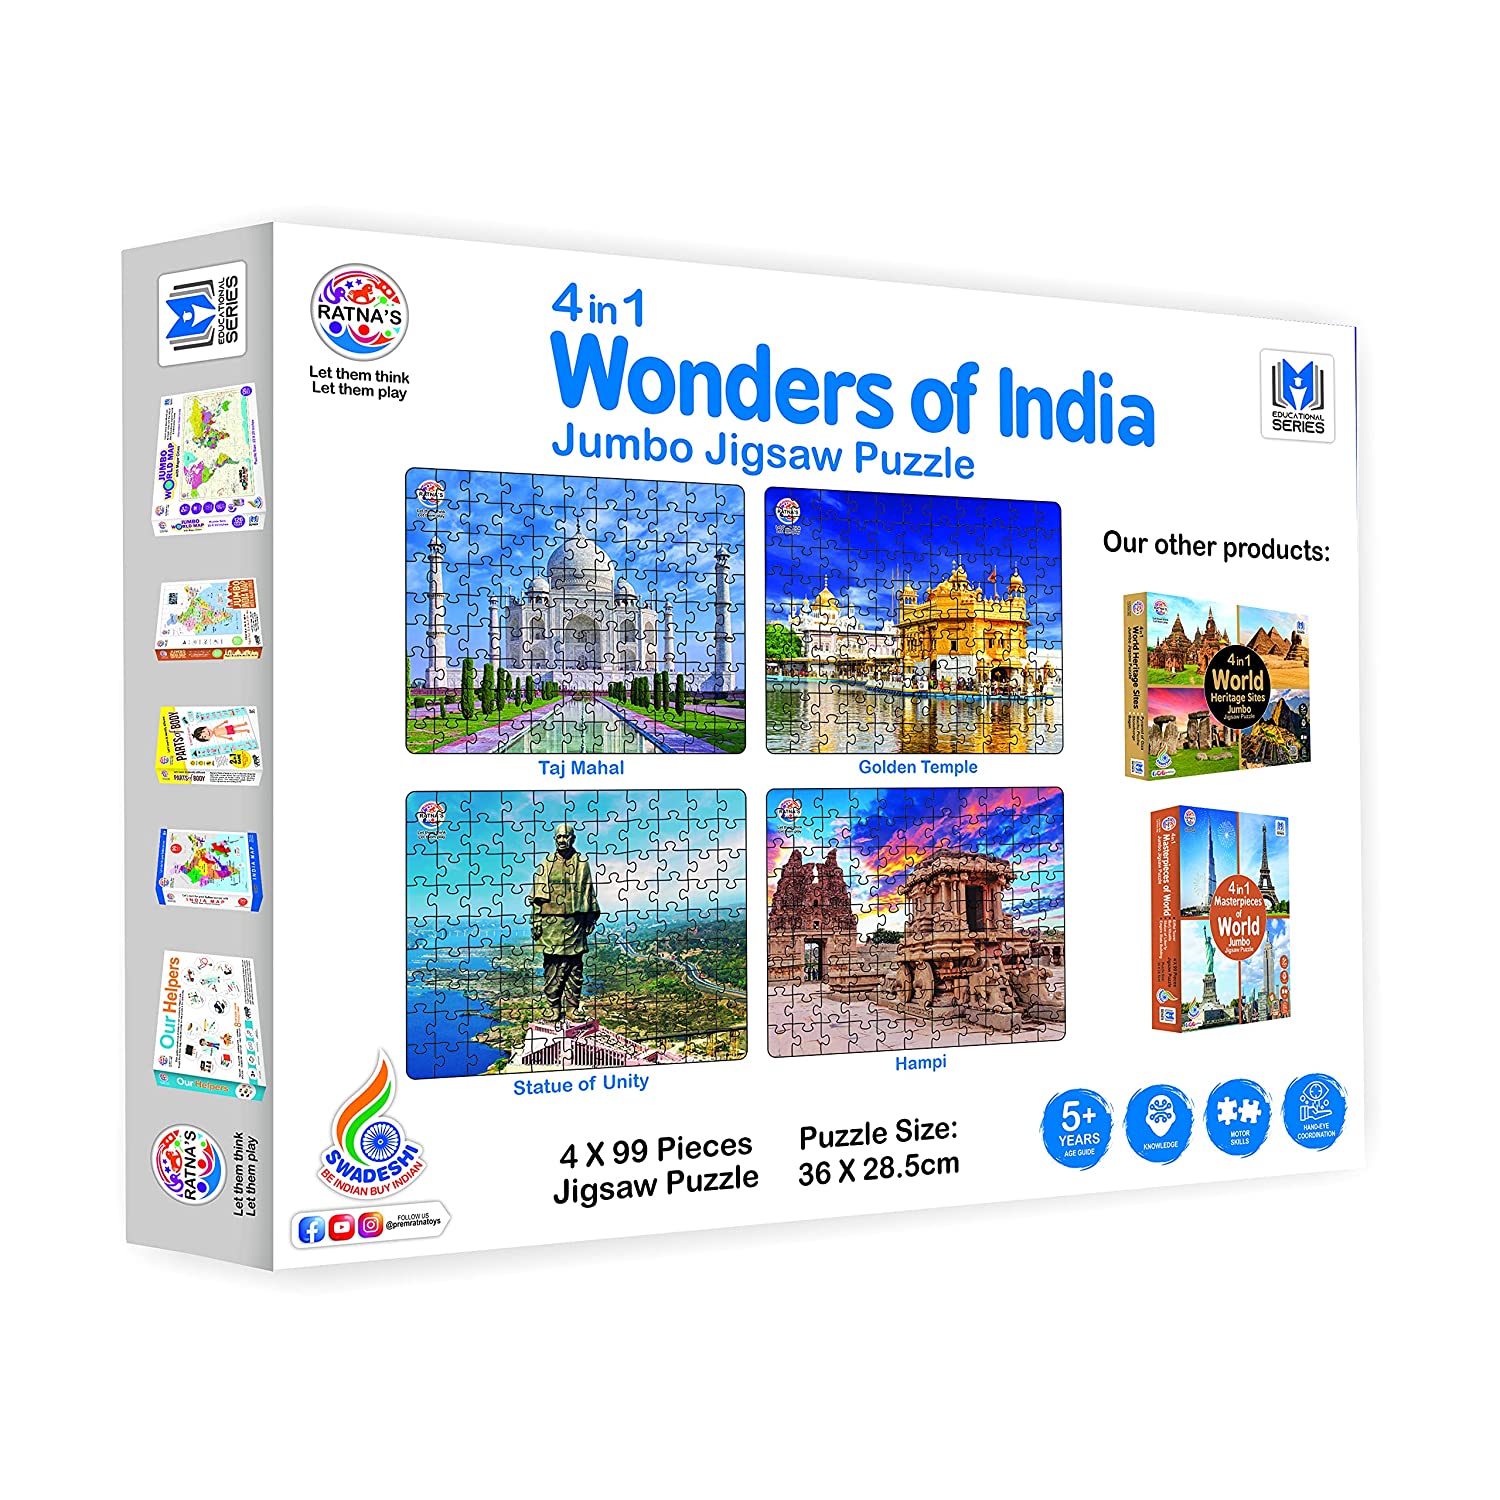 4 in 1 Wonders of India Jumbo